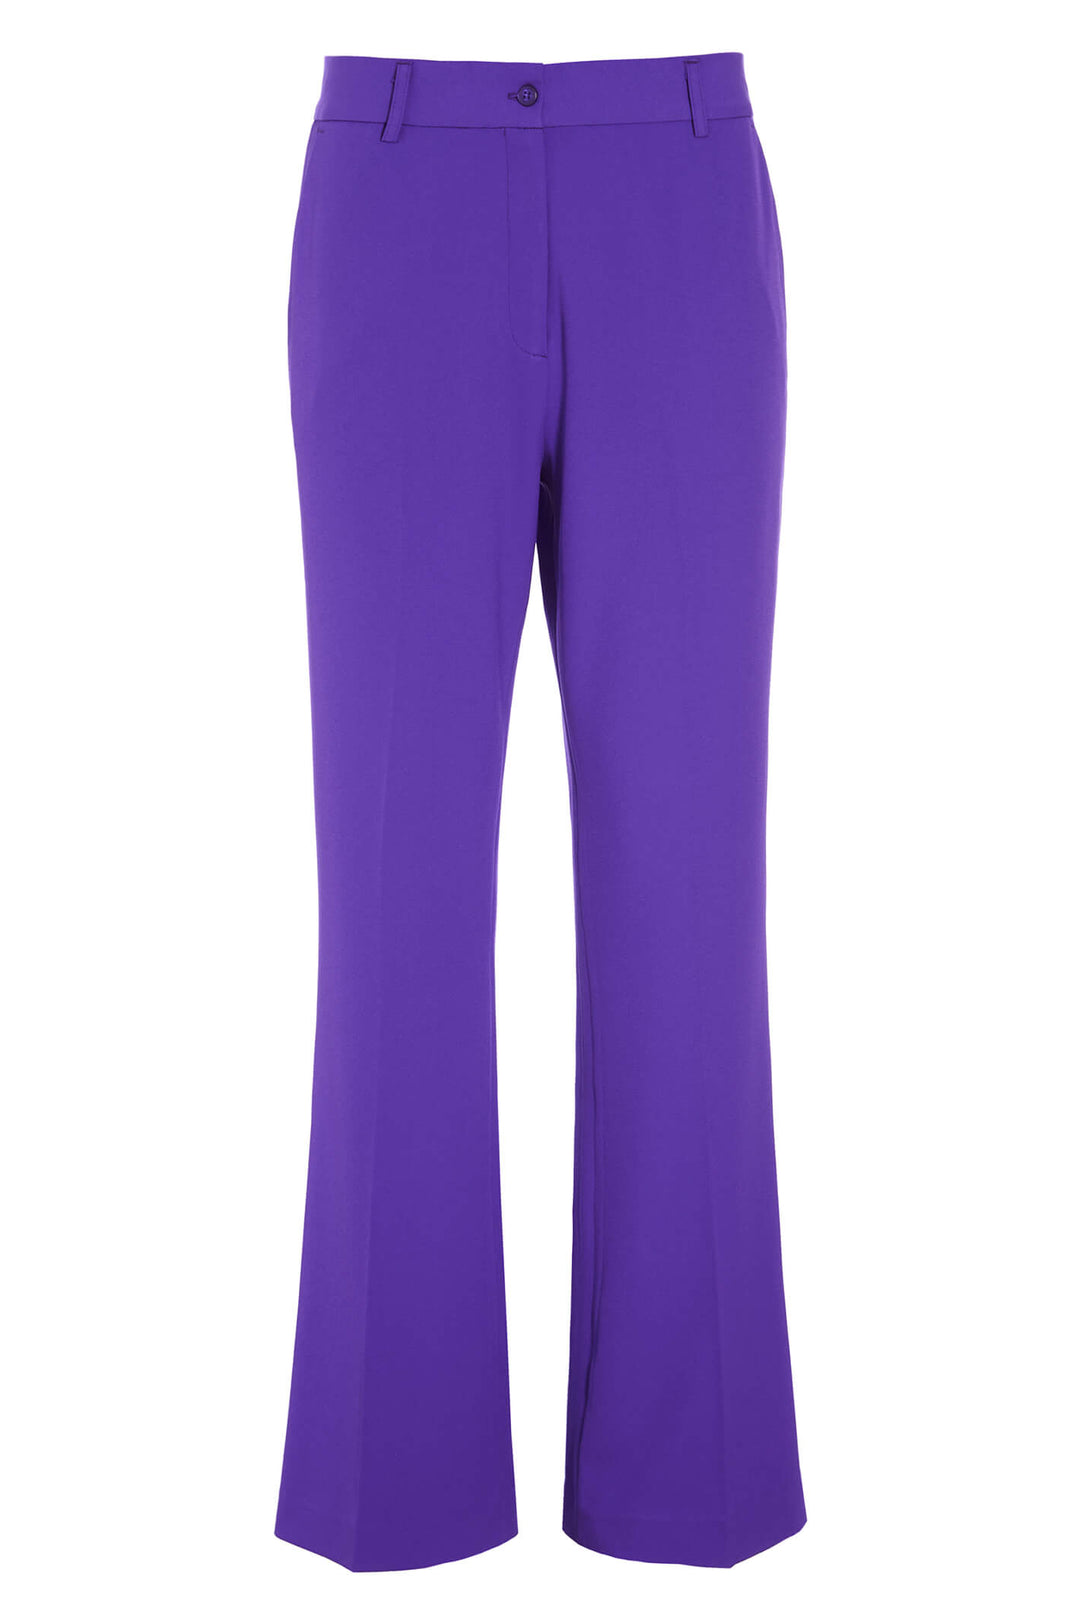 Dea Kudibal 0030723 Rihanna Electric Purple Flared Trousers - Olivia Grace Fashion